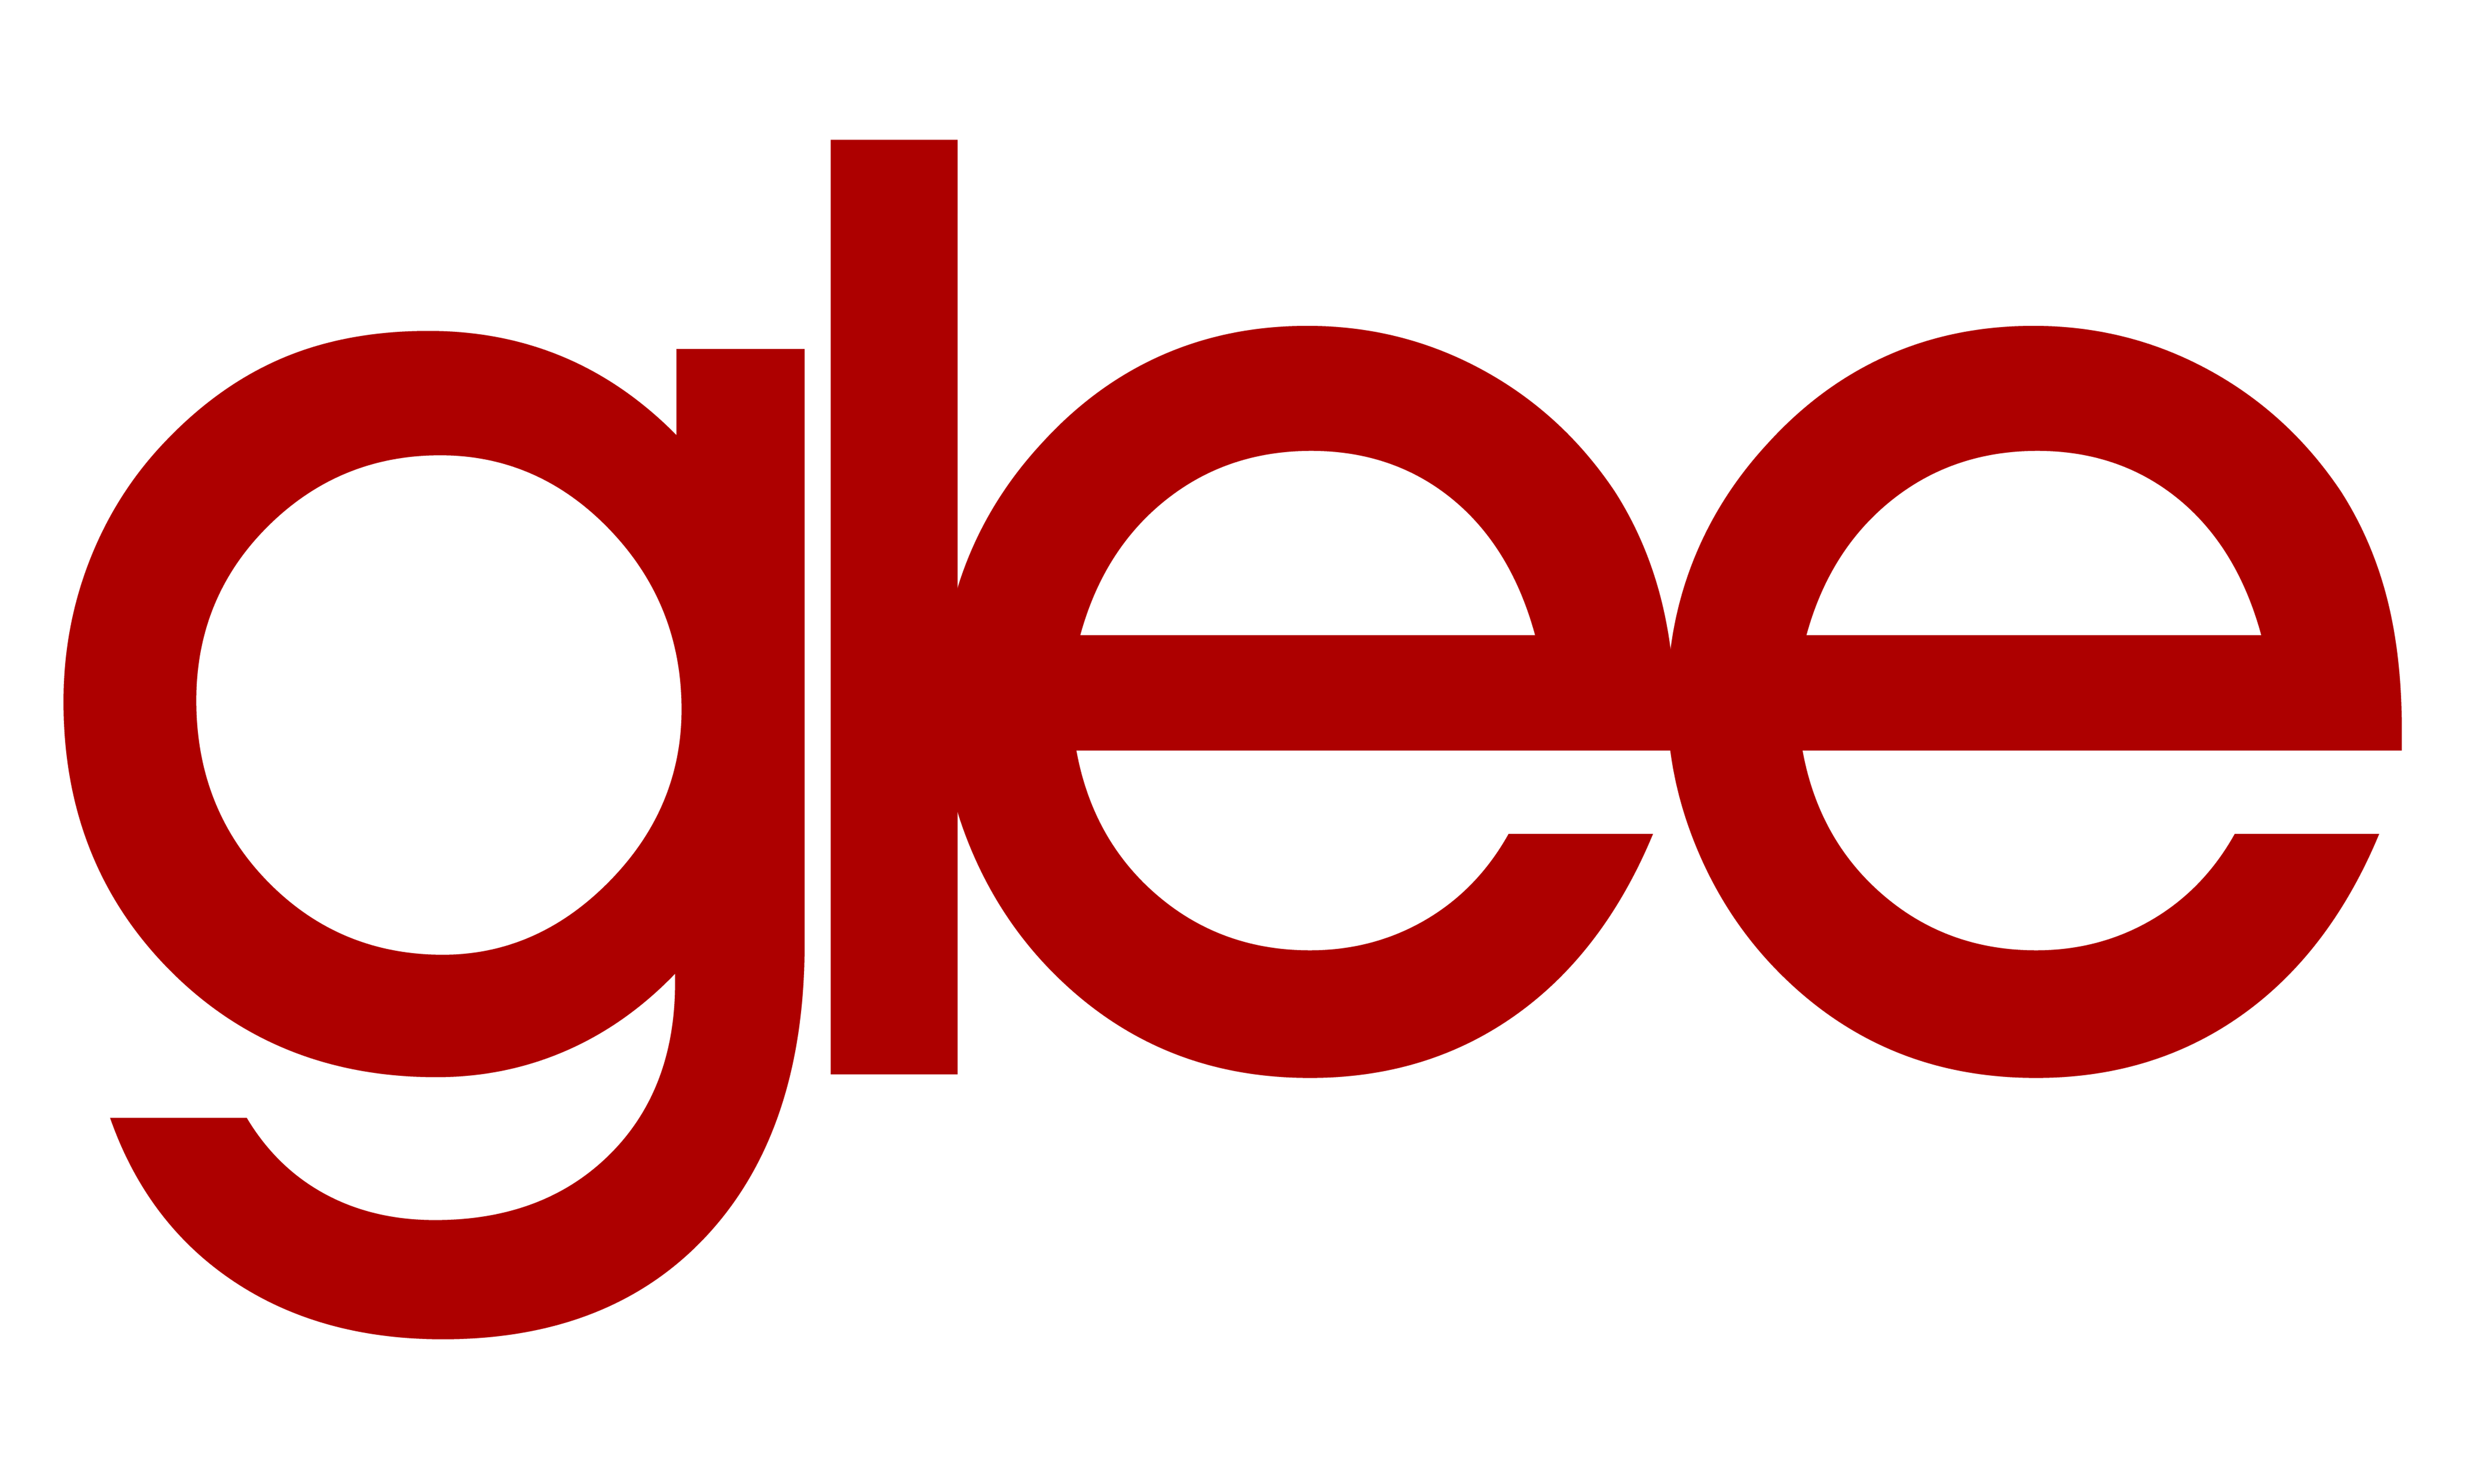 Glee Logo - File:Glee Logo.png - Wikimedia Commons